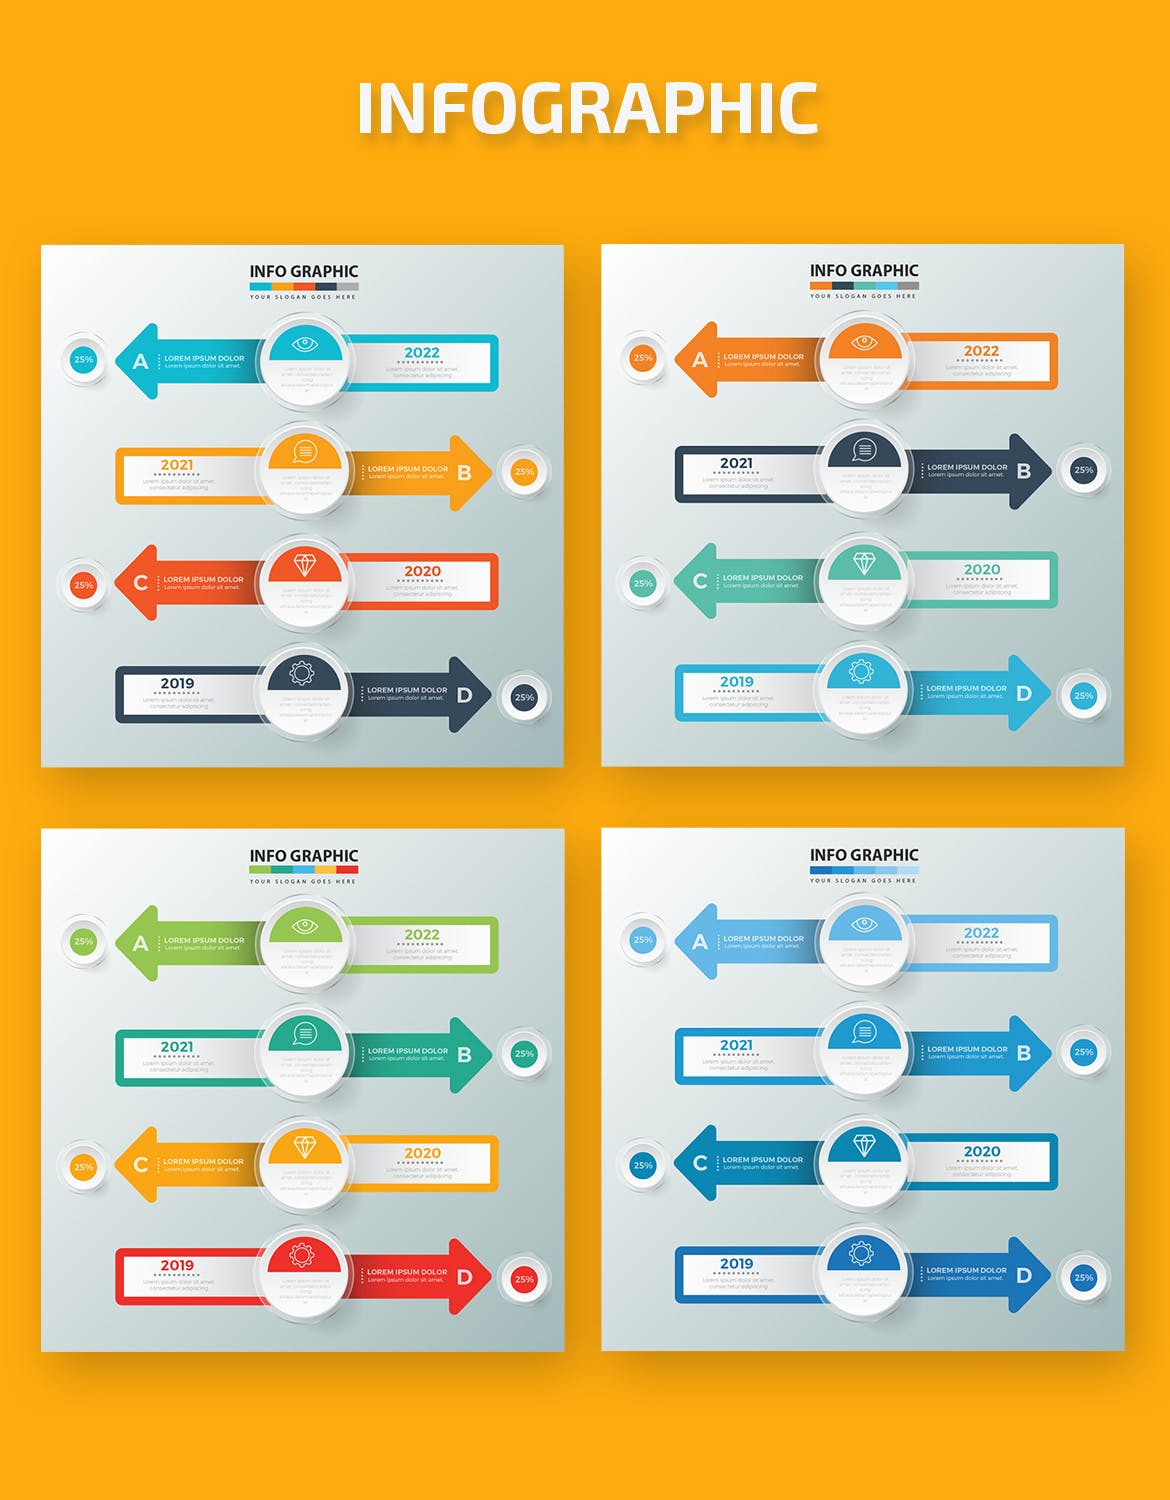 企业年度规划PPT信息图表设计素材 Infographic Elements插图(1)